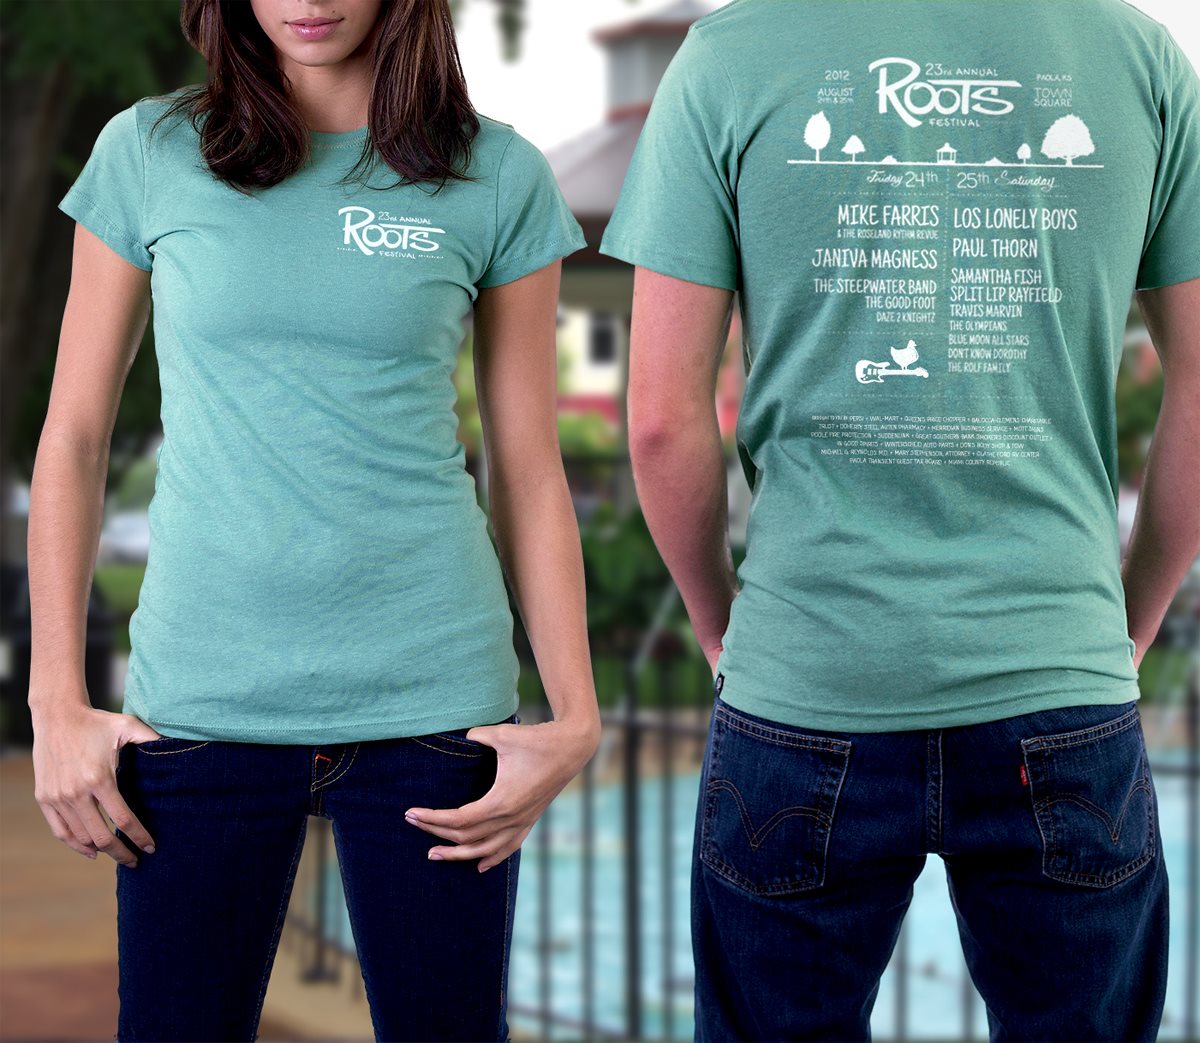 2012 Roots Festival, Custom T-shirt Designs